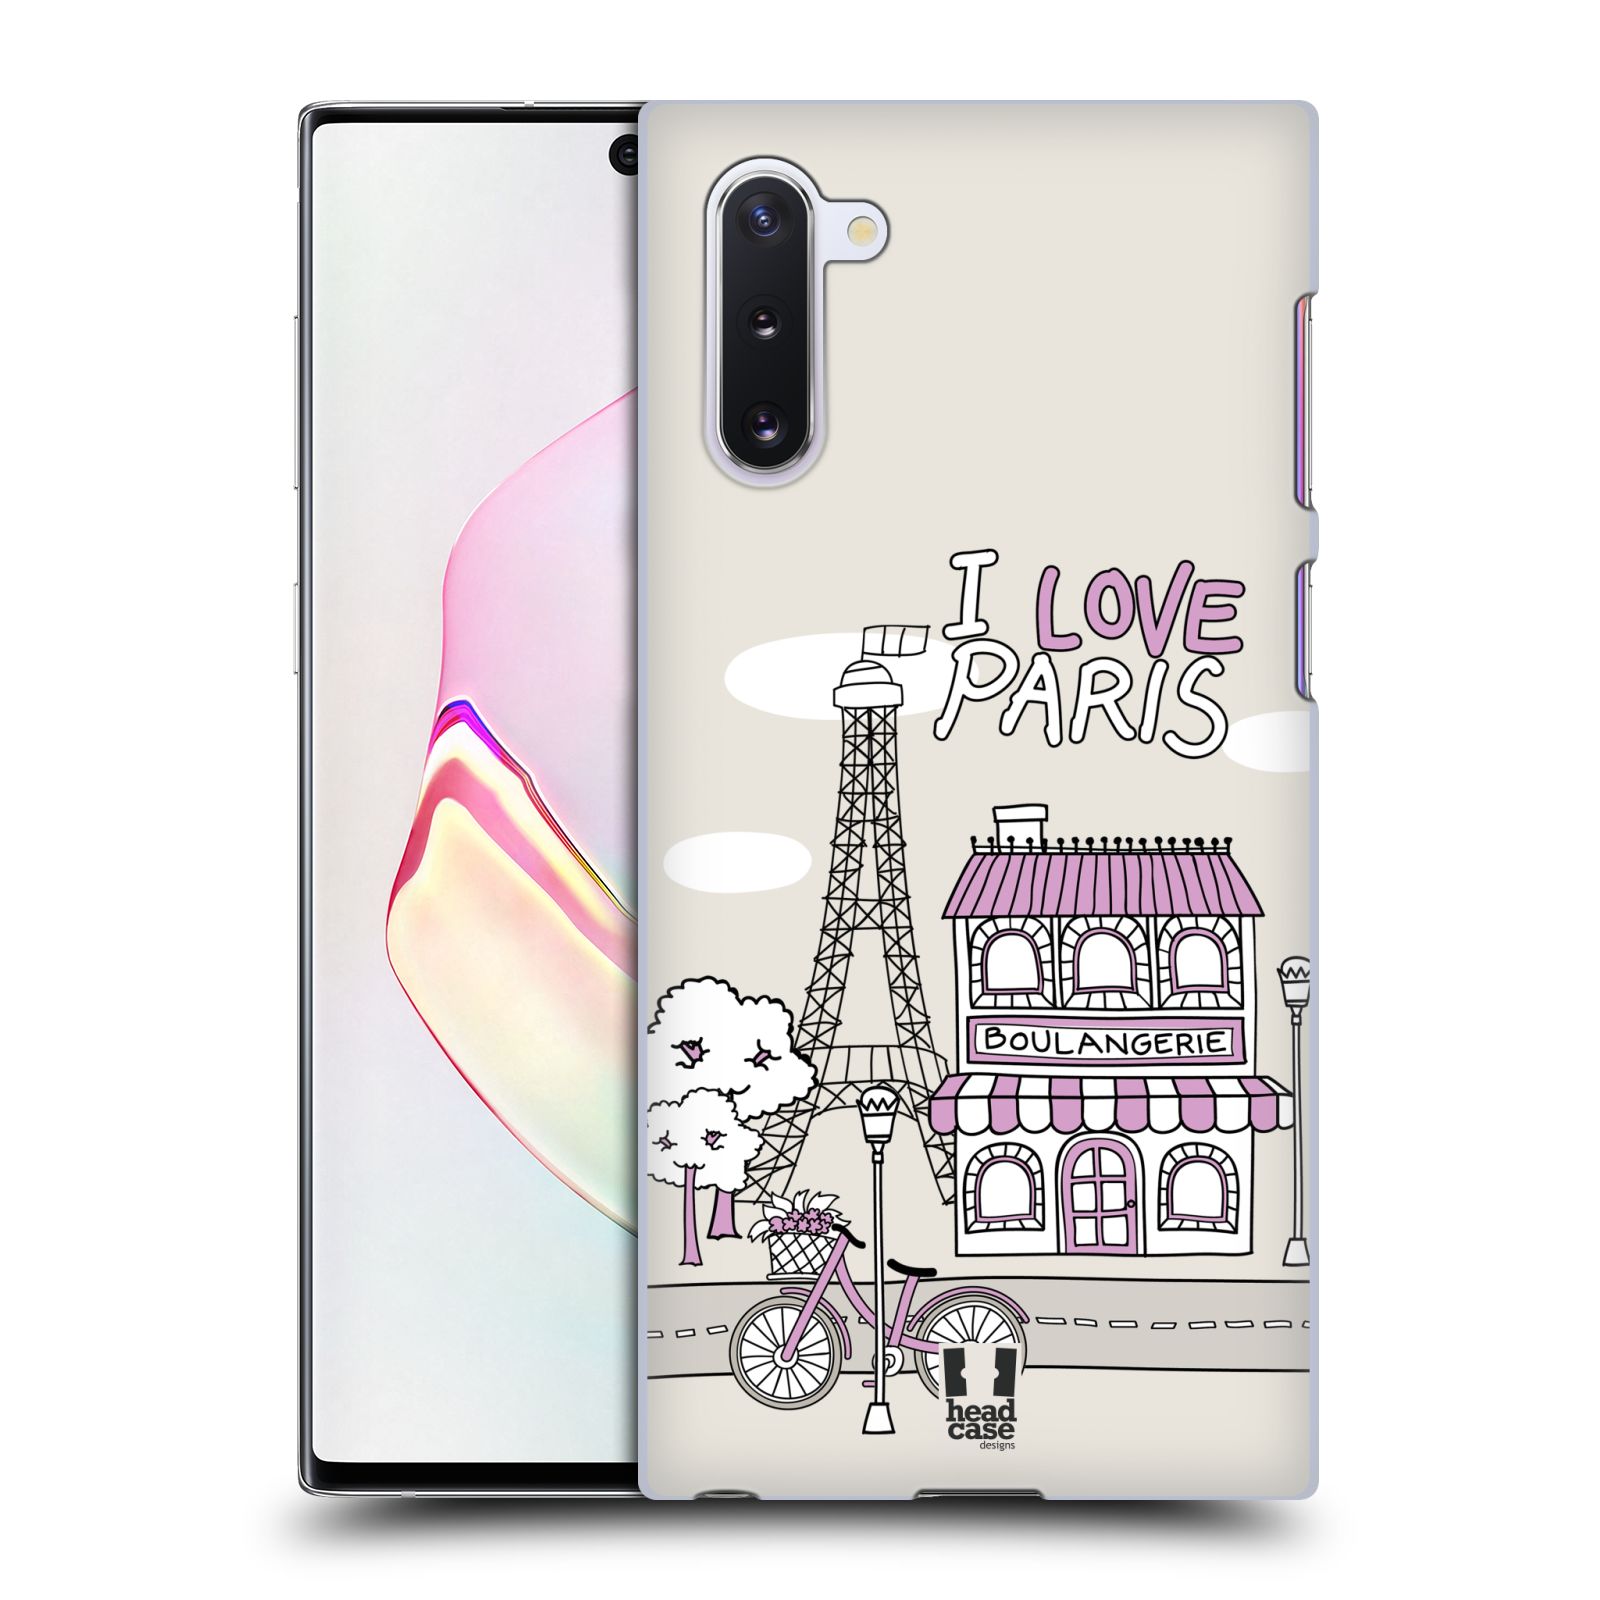 Pouzdro na mobil Samsung Galaxy Note 10 - HEAD CASE - vzor Kreslená městečka FIALOVÁ, Paříž, Francie, I LOVE PARIS